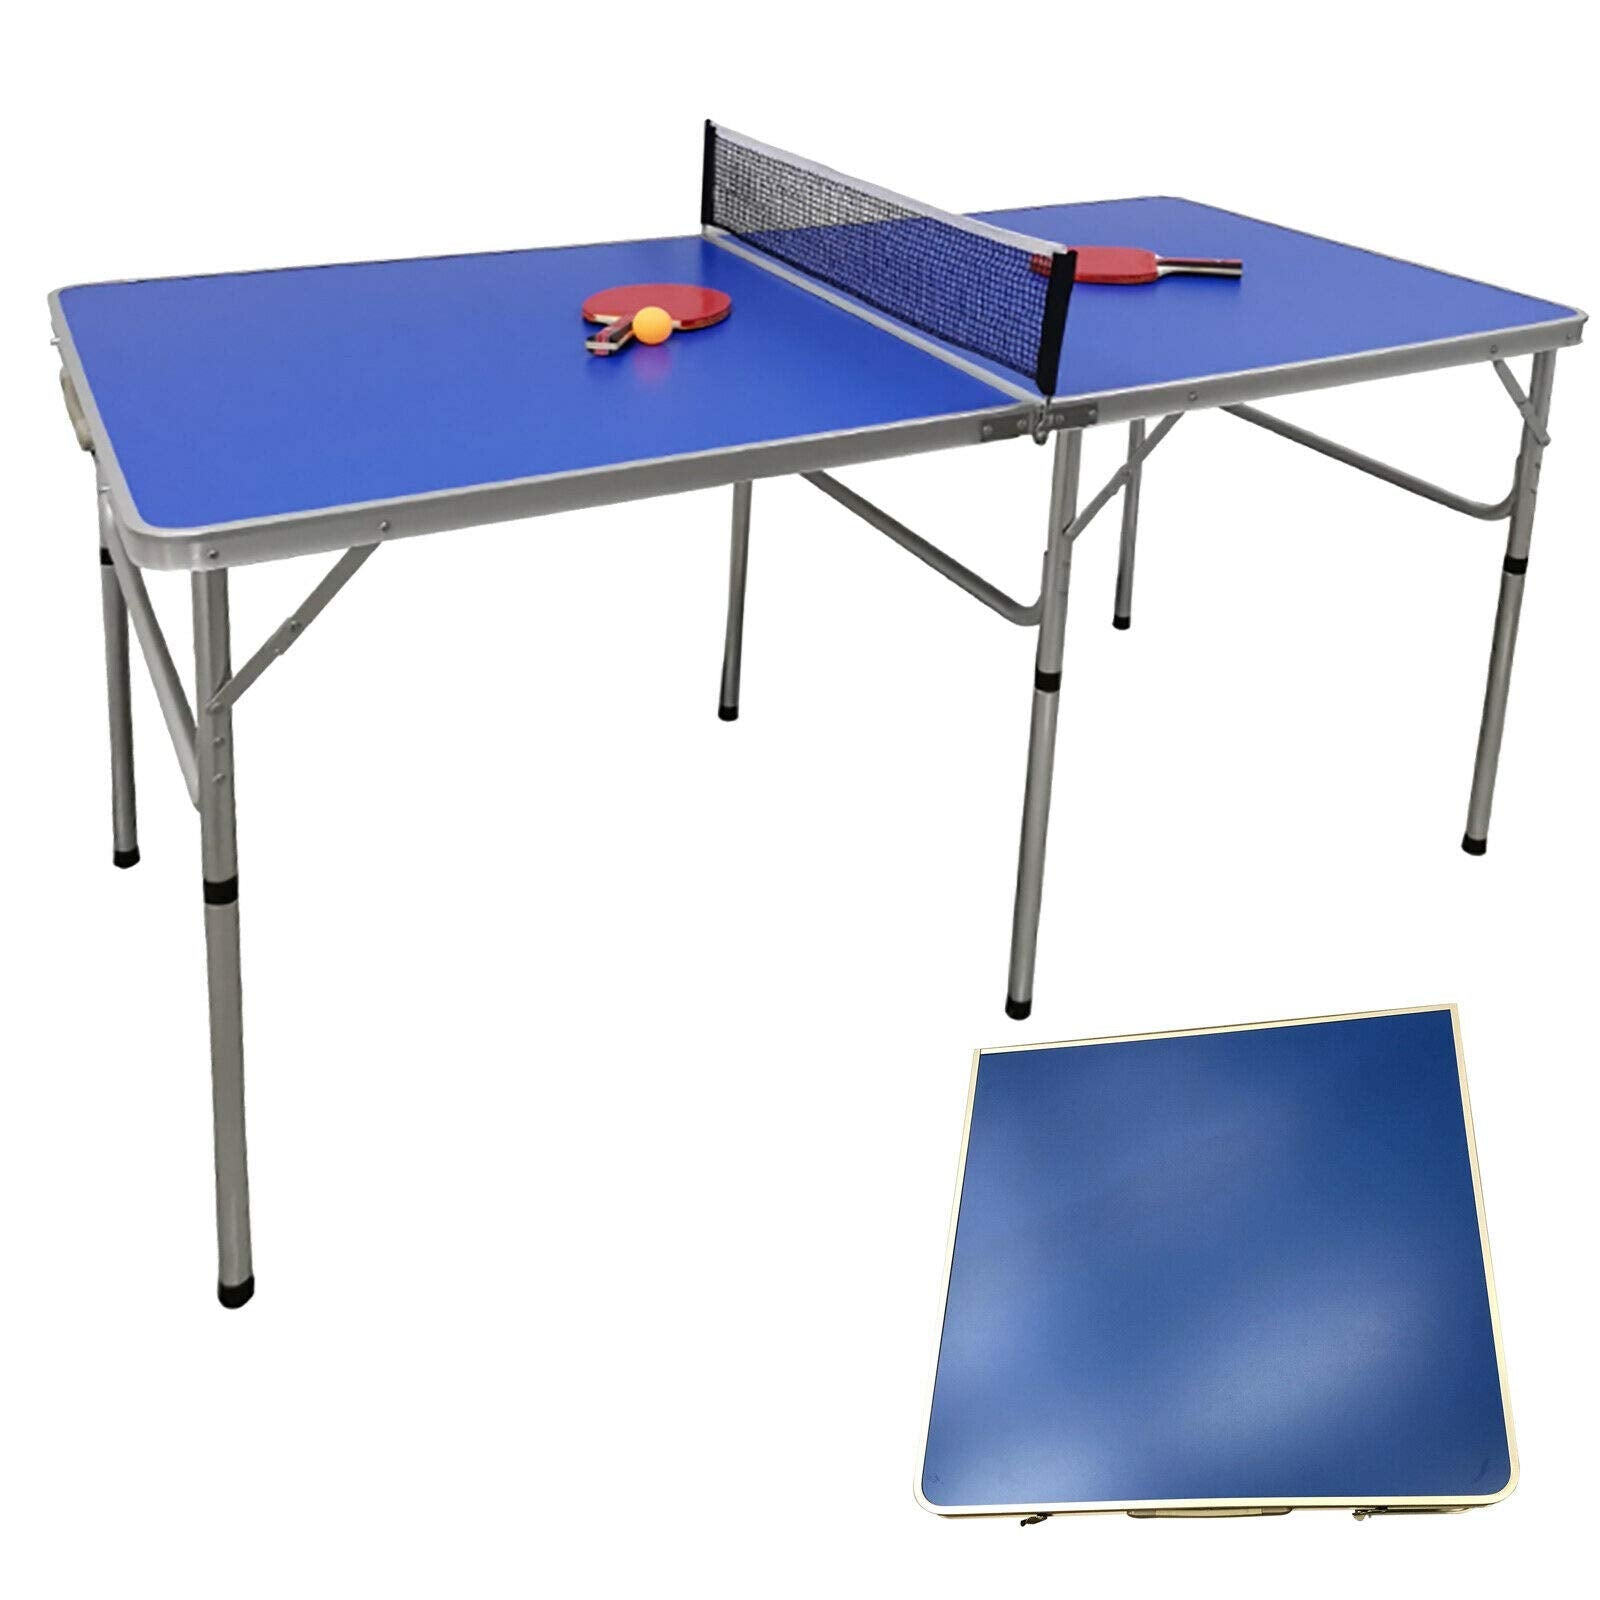 Table de ping-pong pliable portable - Avec filet - Cadre en alliage d'aluminium